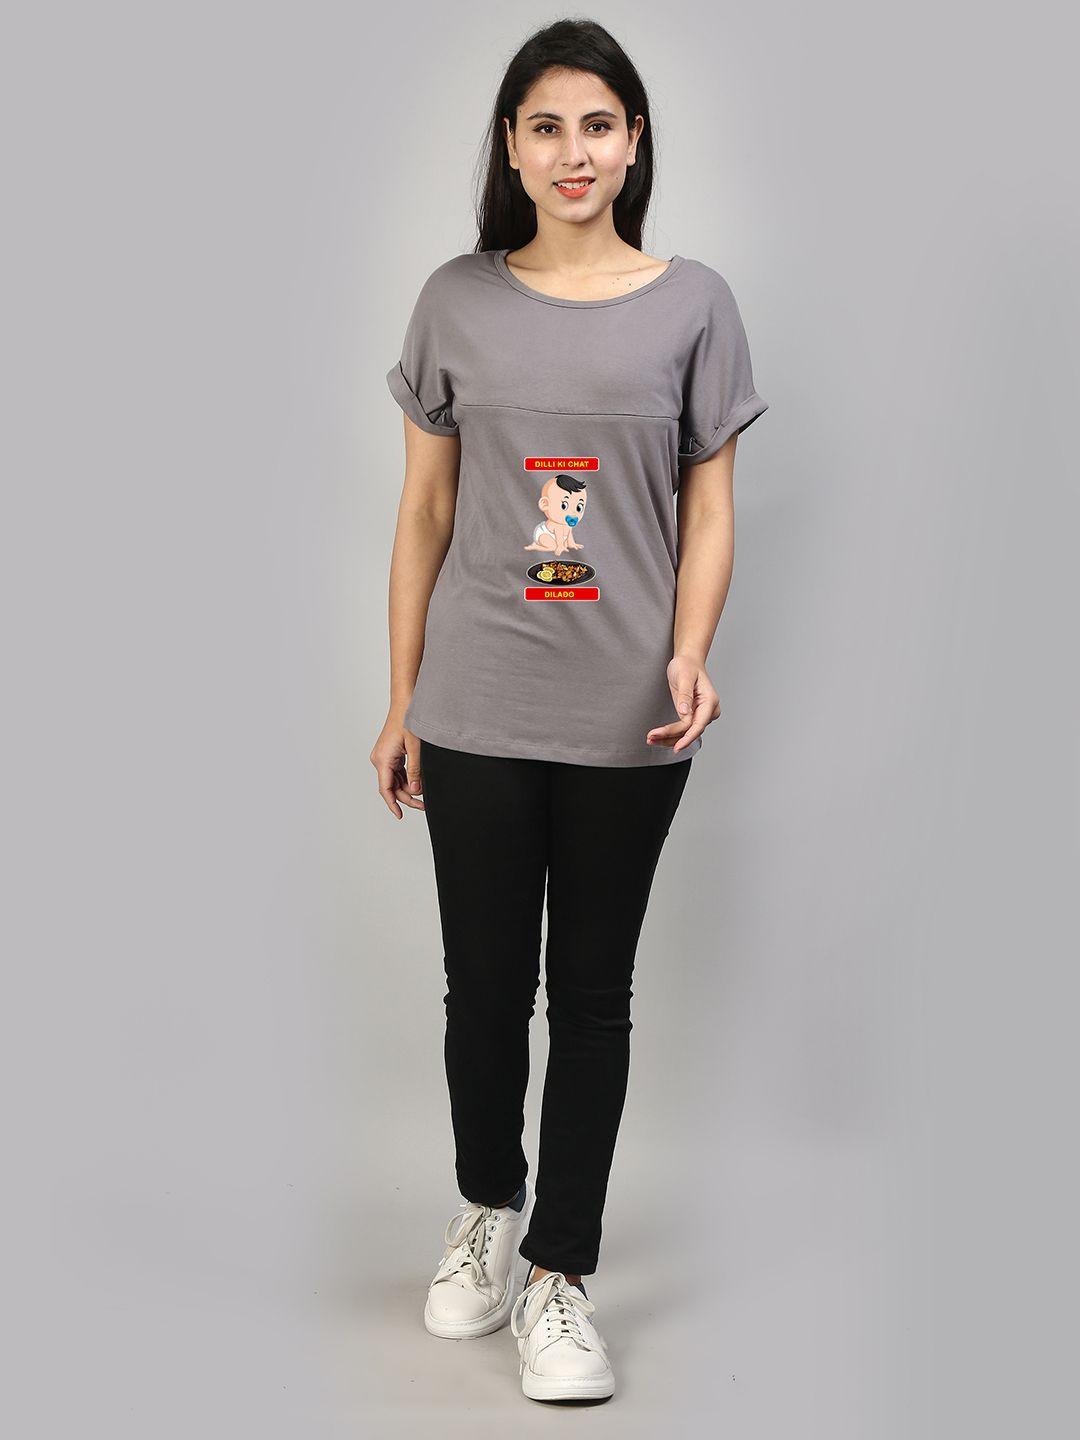 sillyboom-women-grey-applique-t-shirt